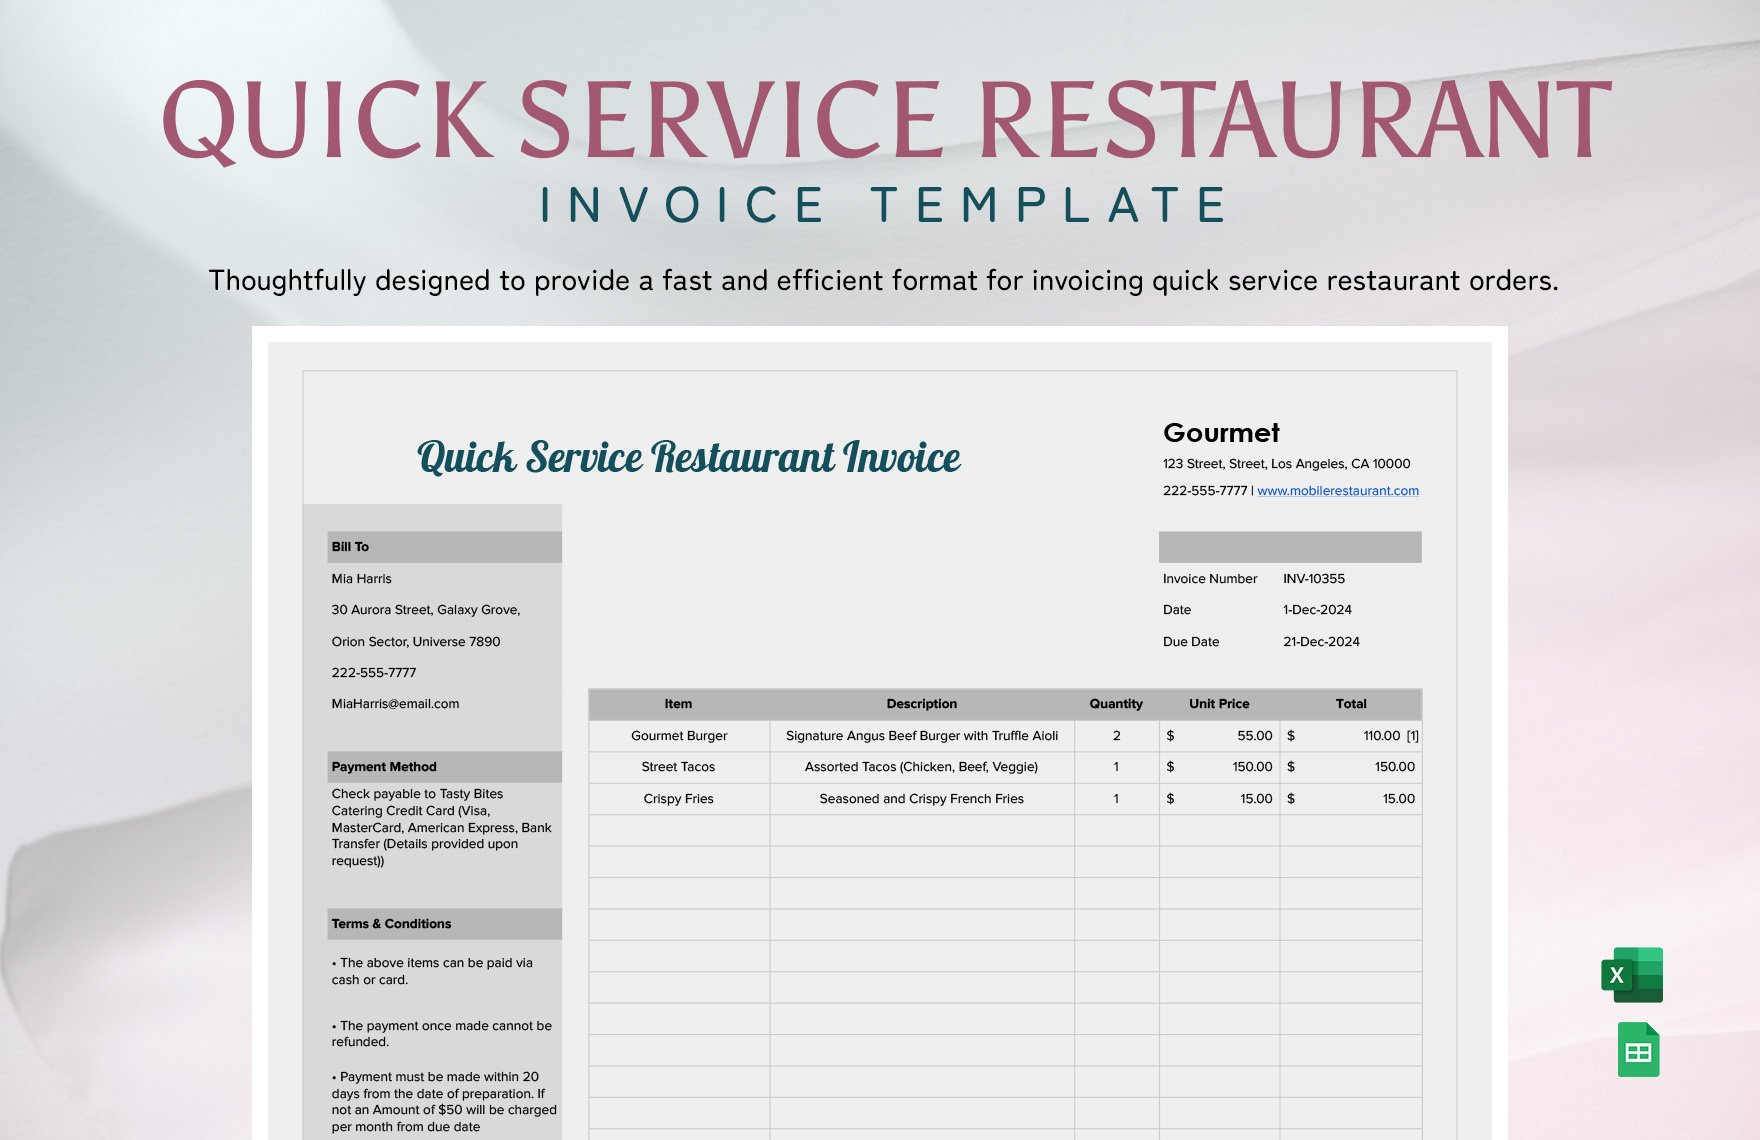 Quick Service Restaurant Invoice Template